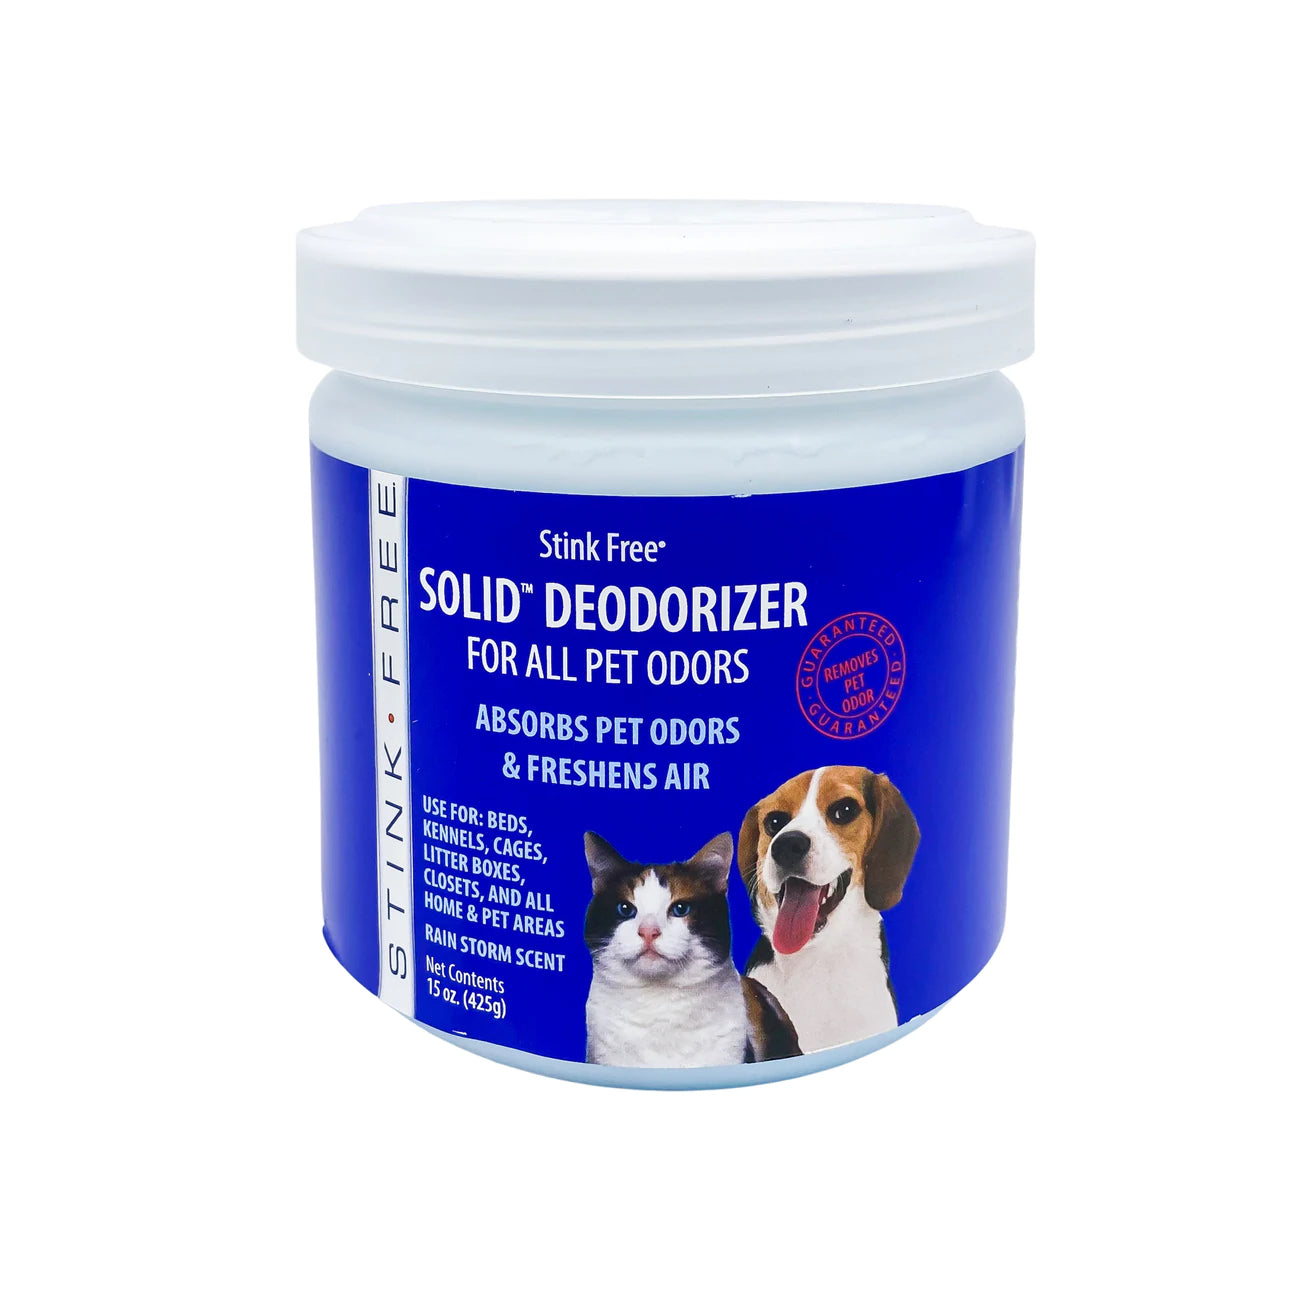 Solid Gel Deodorizer For Pets - Rainstorm Scent